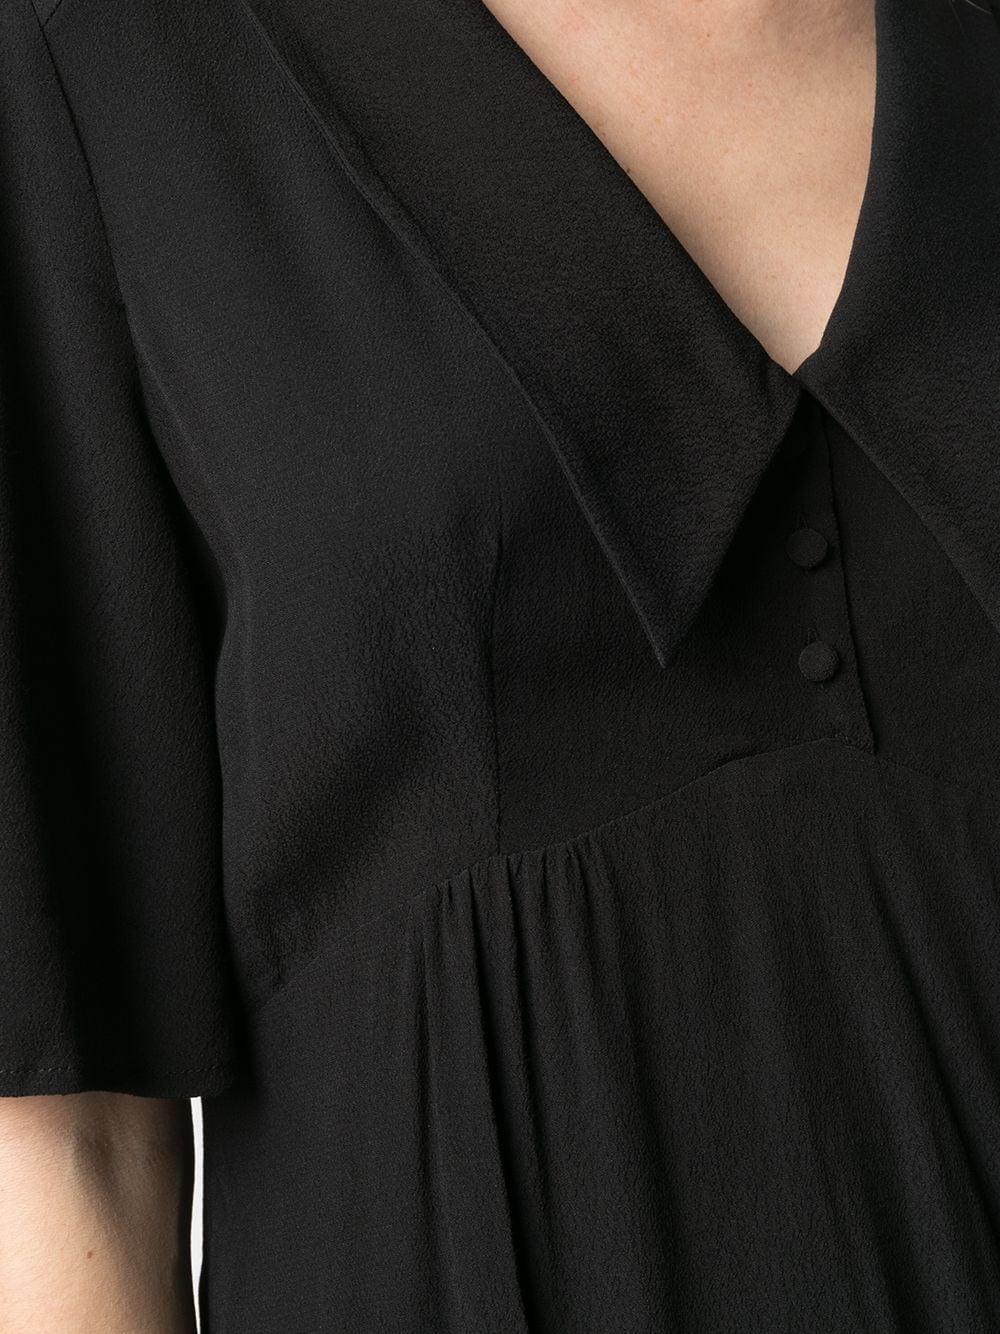 Ba&sh Peyton V-neck Dress in Black | Lyst